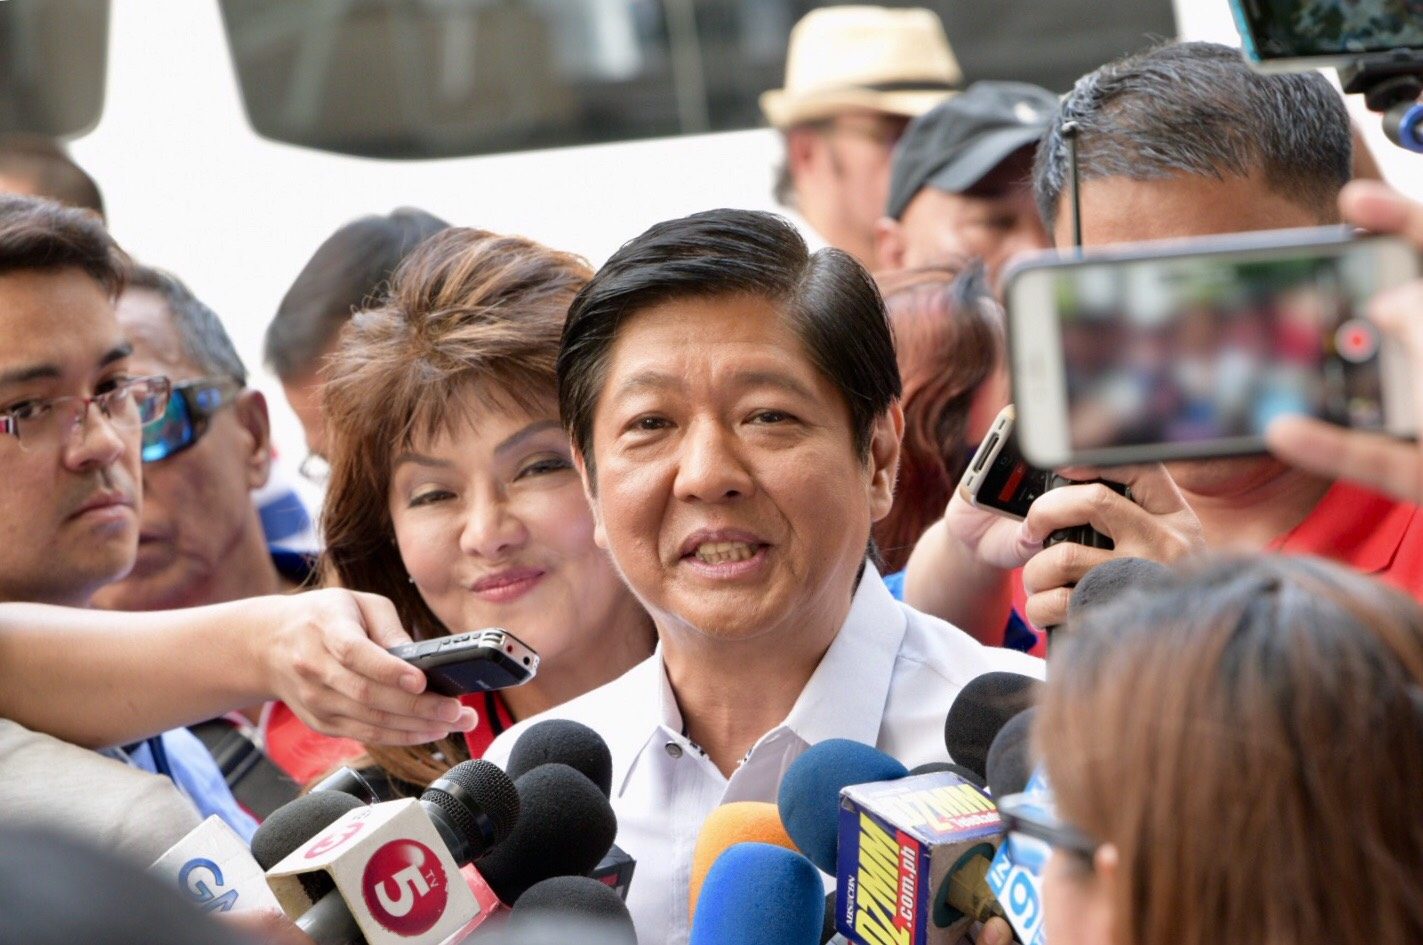 Did Imee Marcos ‘gatecrash’ the VP ballot recount site?